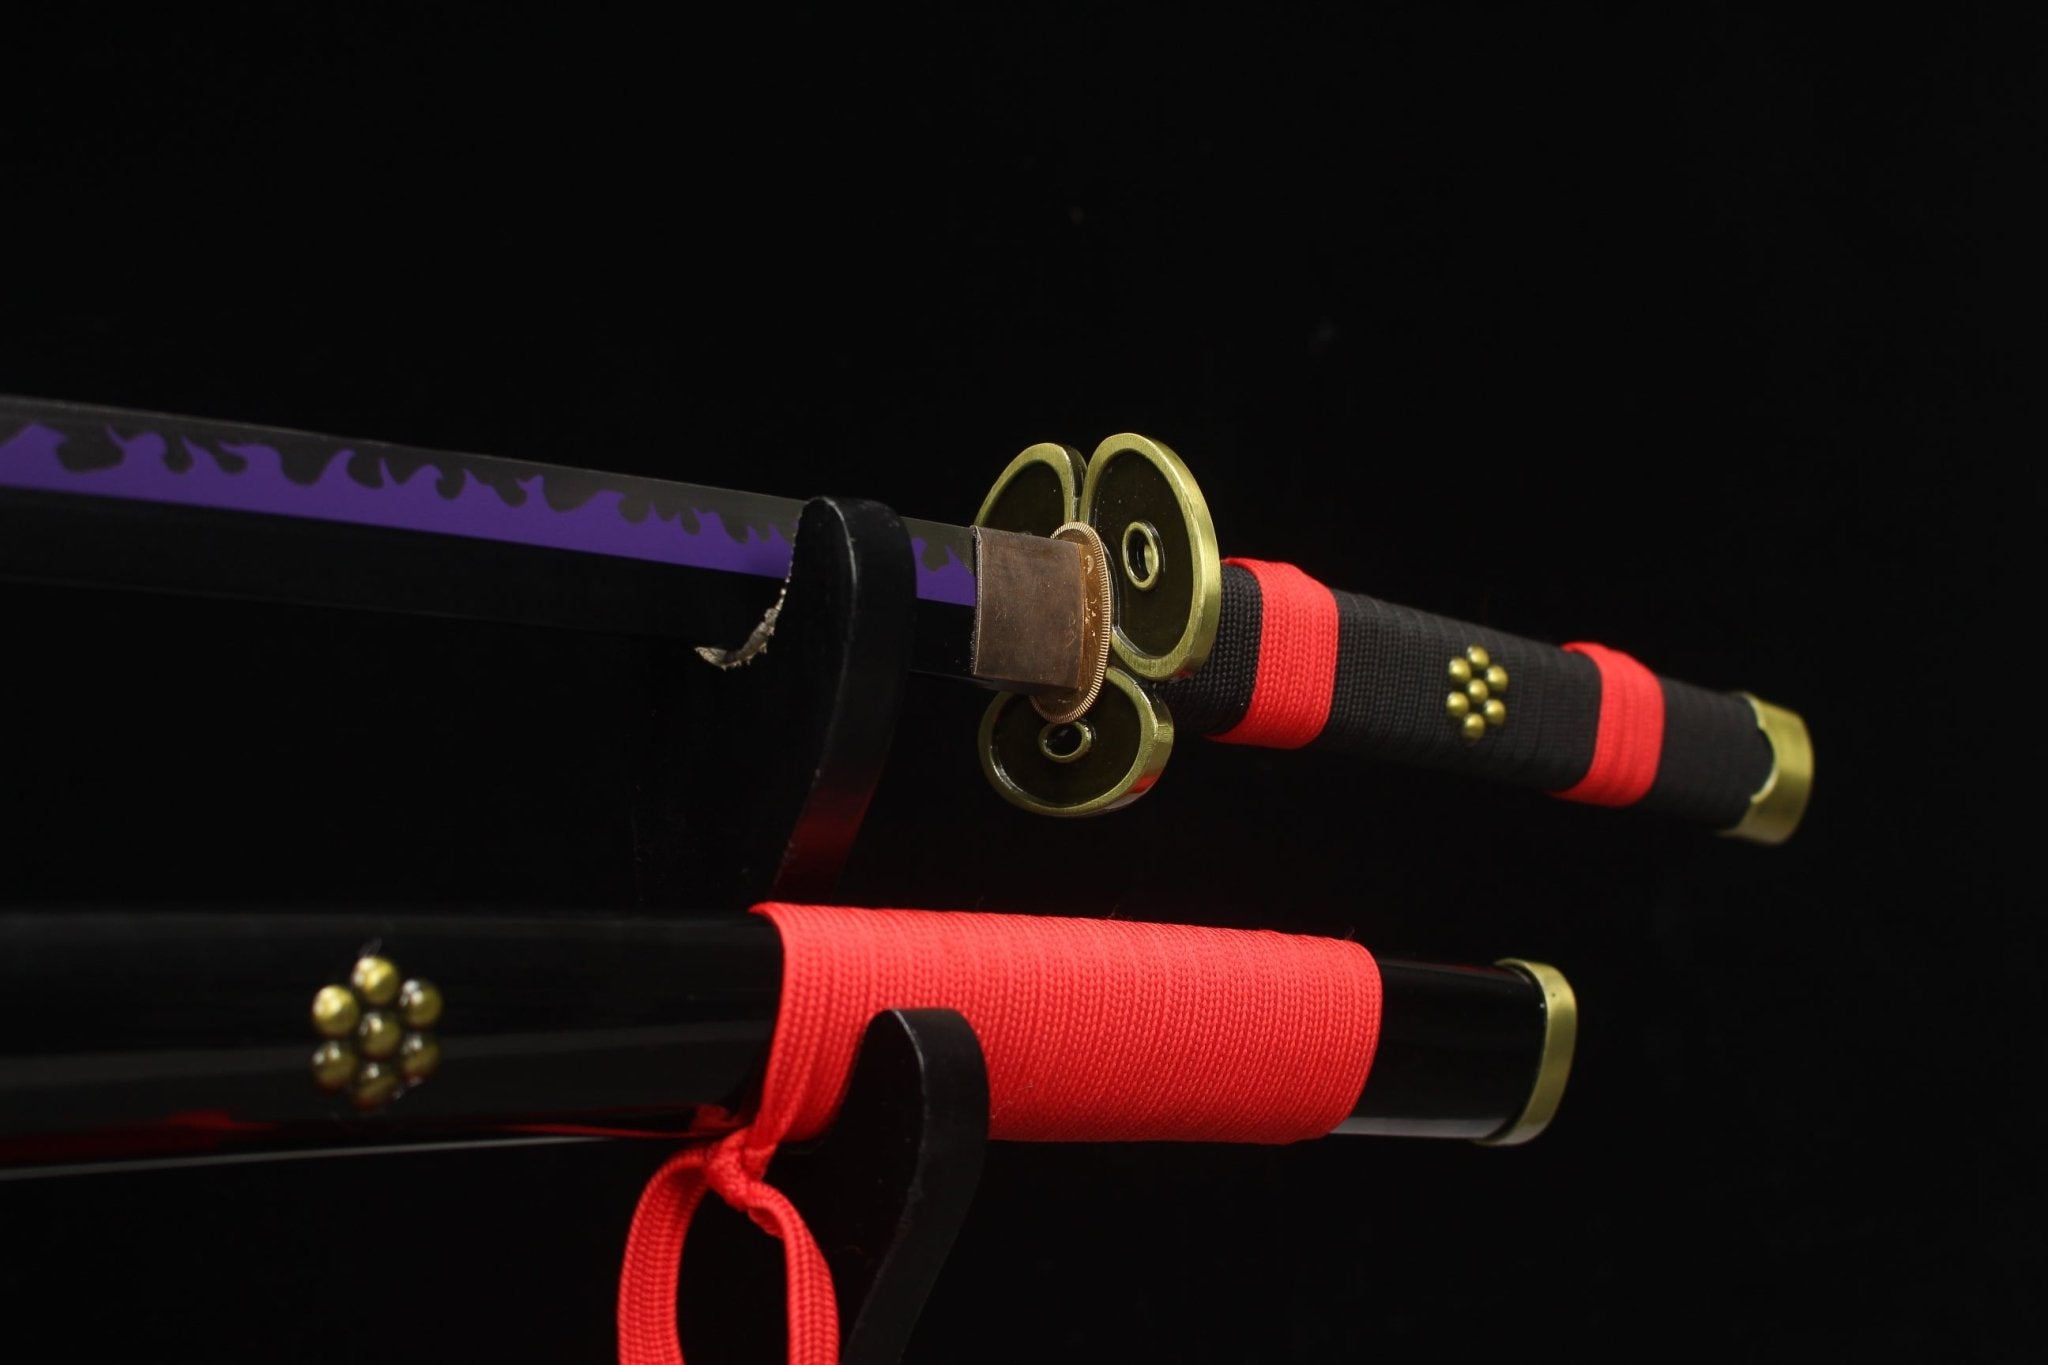 Katana - Enma (阎魔) by NIMOFAN Katana丨Japanese sword, perfect for martial arts and collectors.